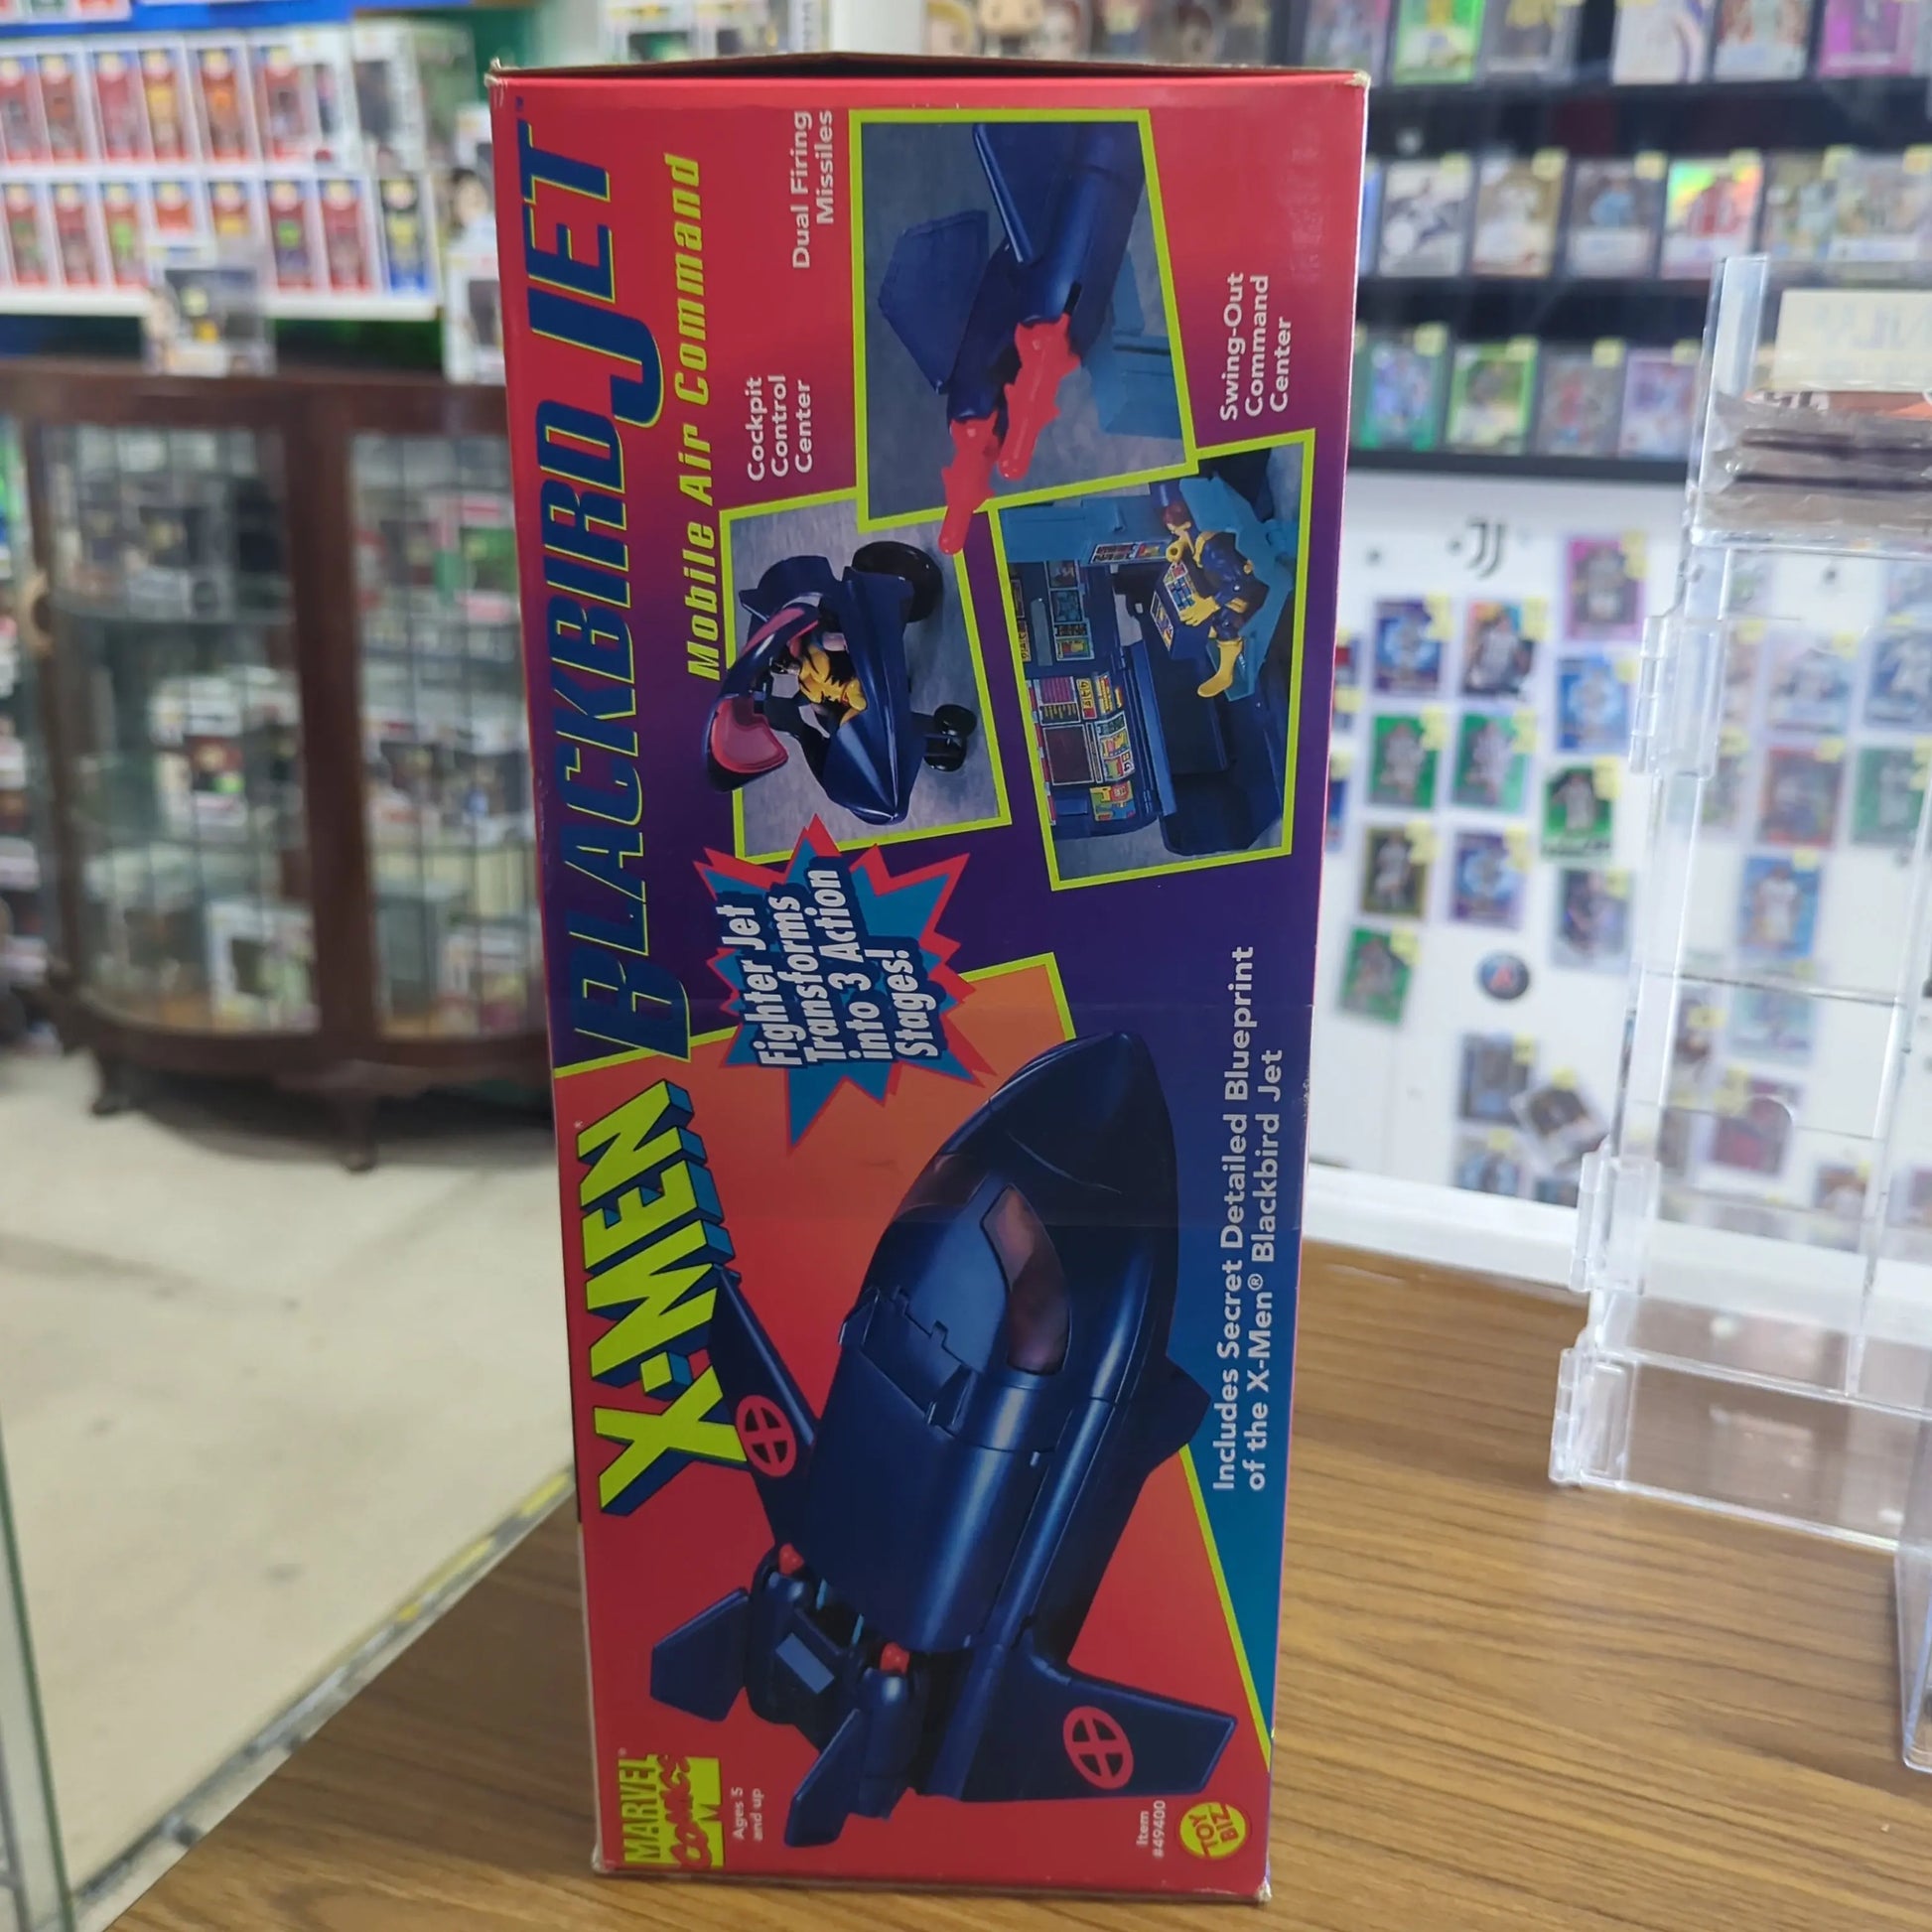 1994 Marvel Comics X-Men Blackbird Jet Vehicle by Toy Biz - Sealed original box FRENLY BRICKS - Open 7 Days